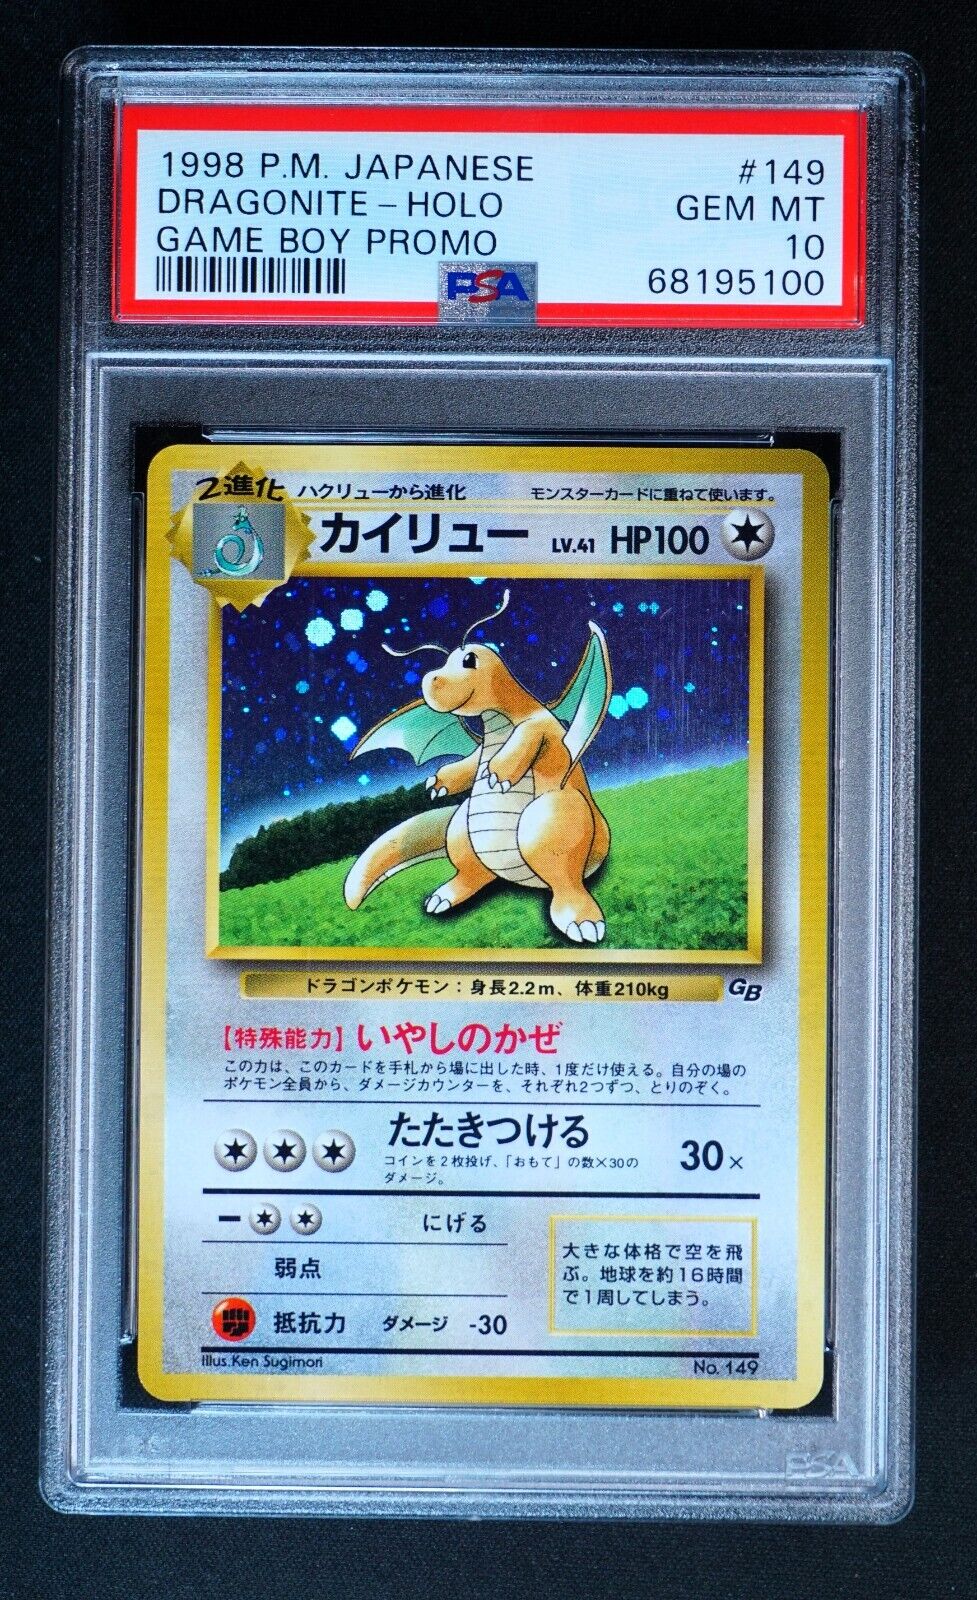 PSA 10 Dragonite 149 Game Boy Promo Japanese Holo 1998 Pokemon